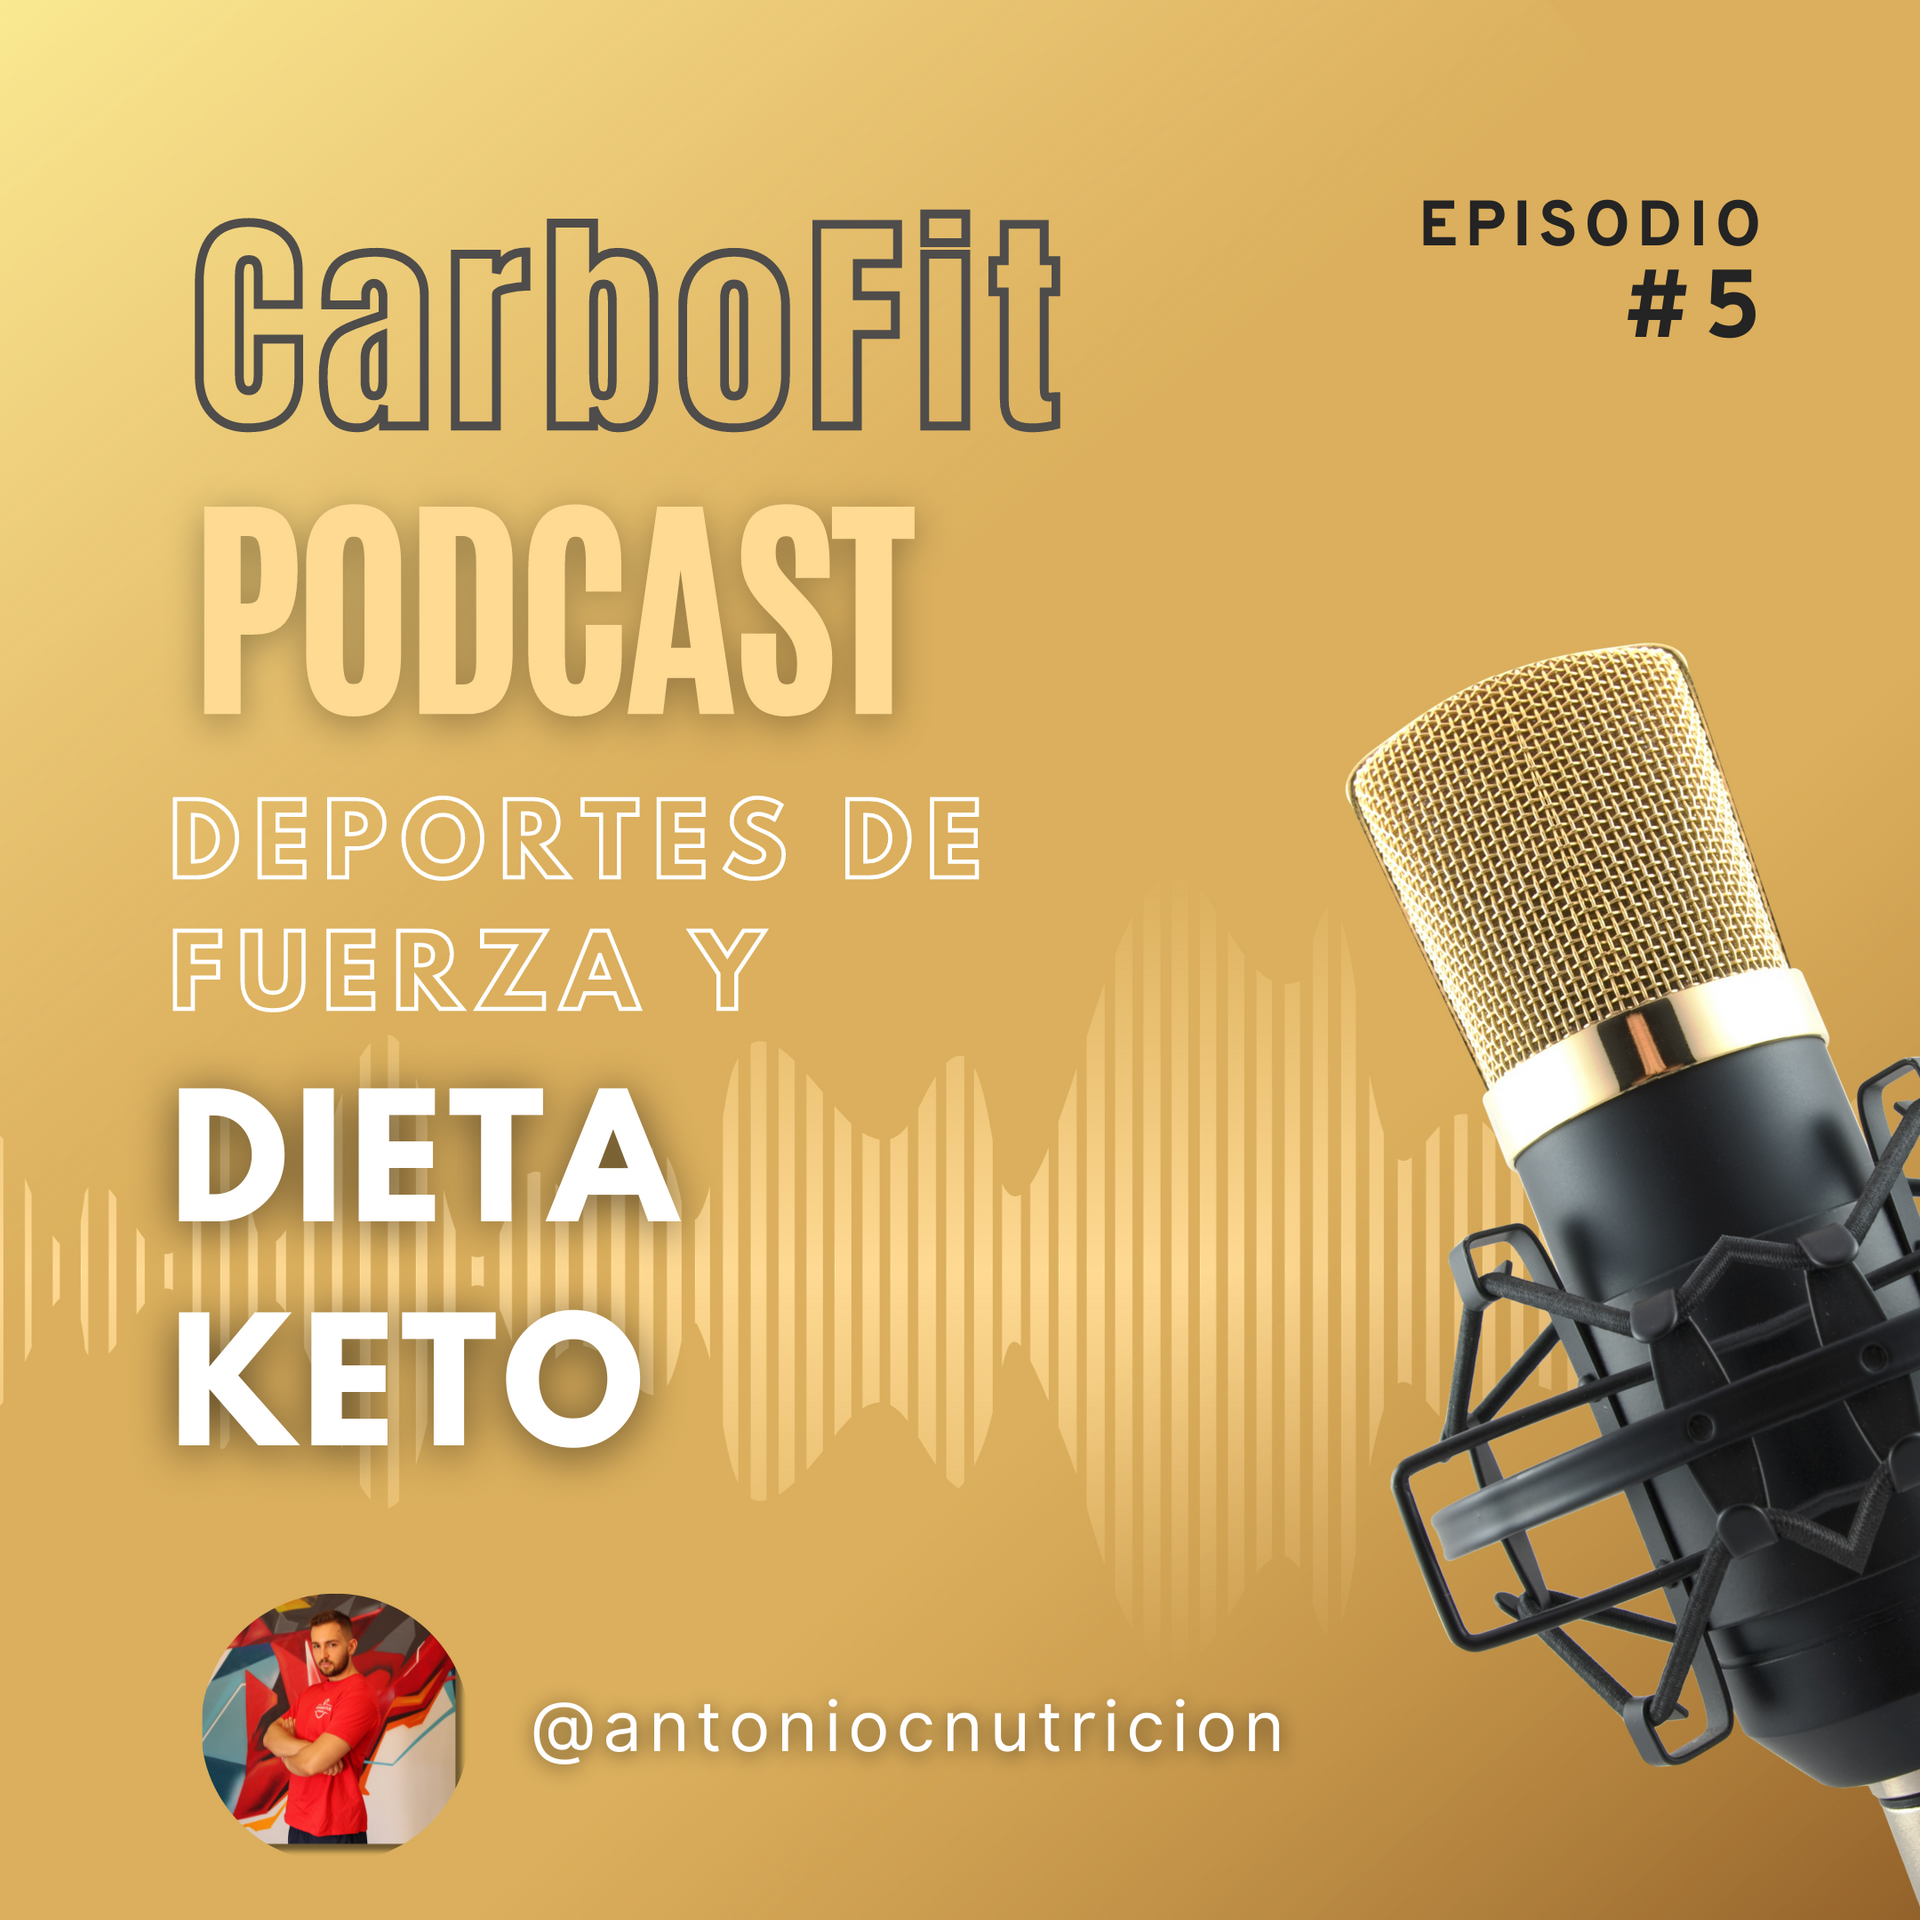 CarboFit podcast